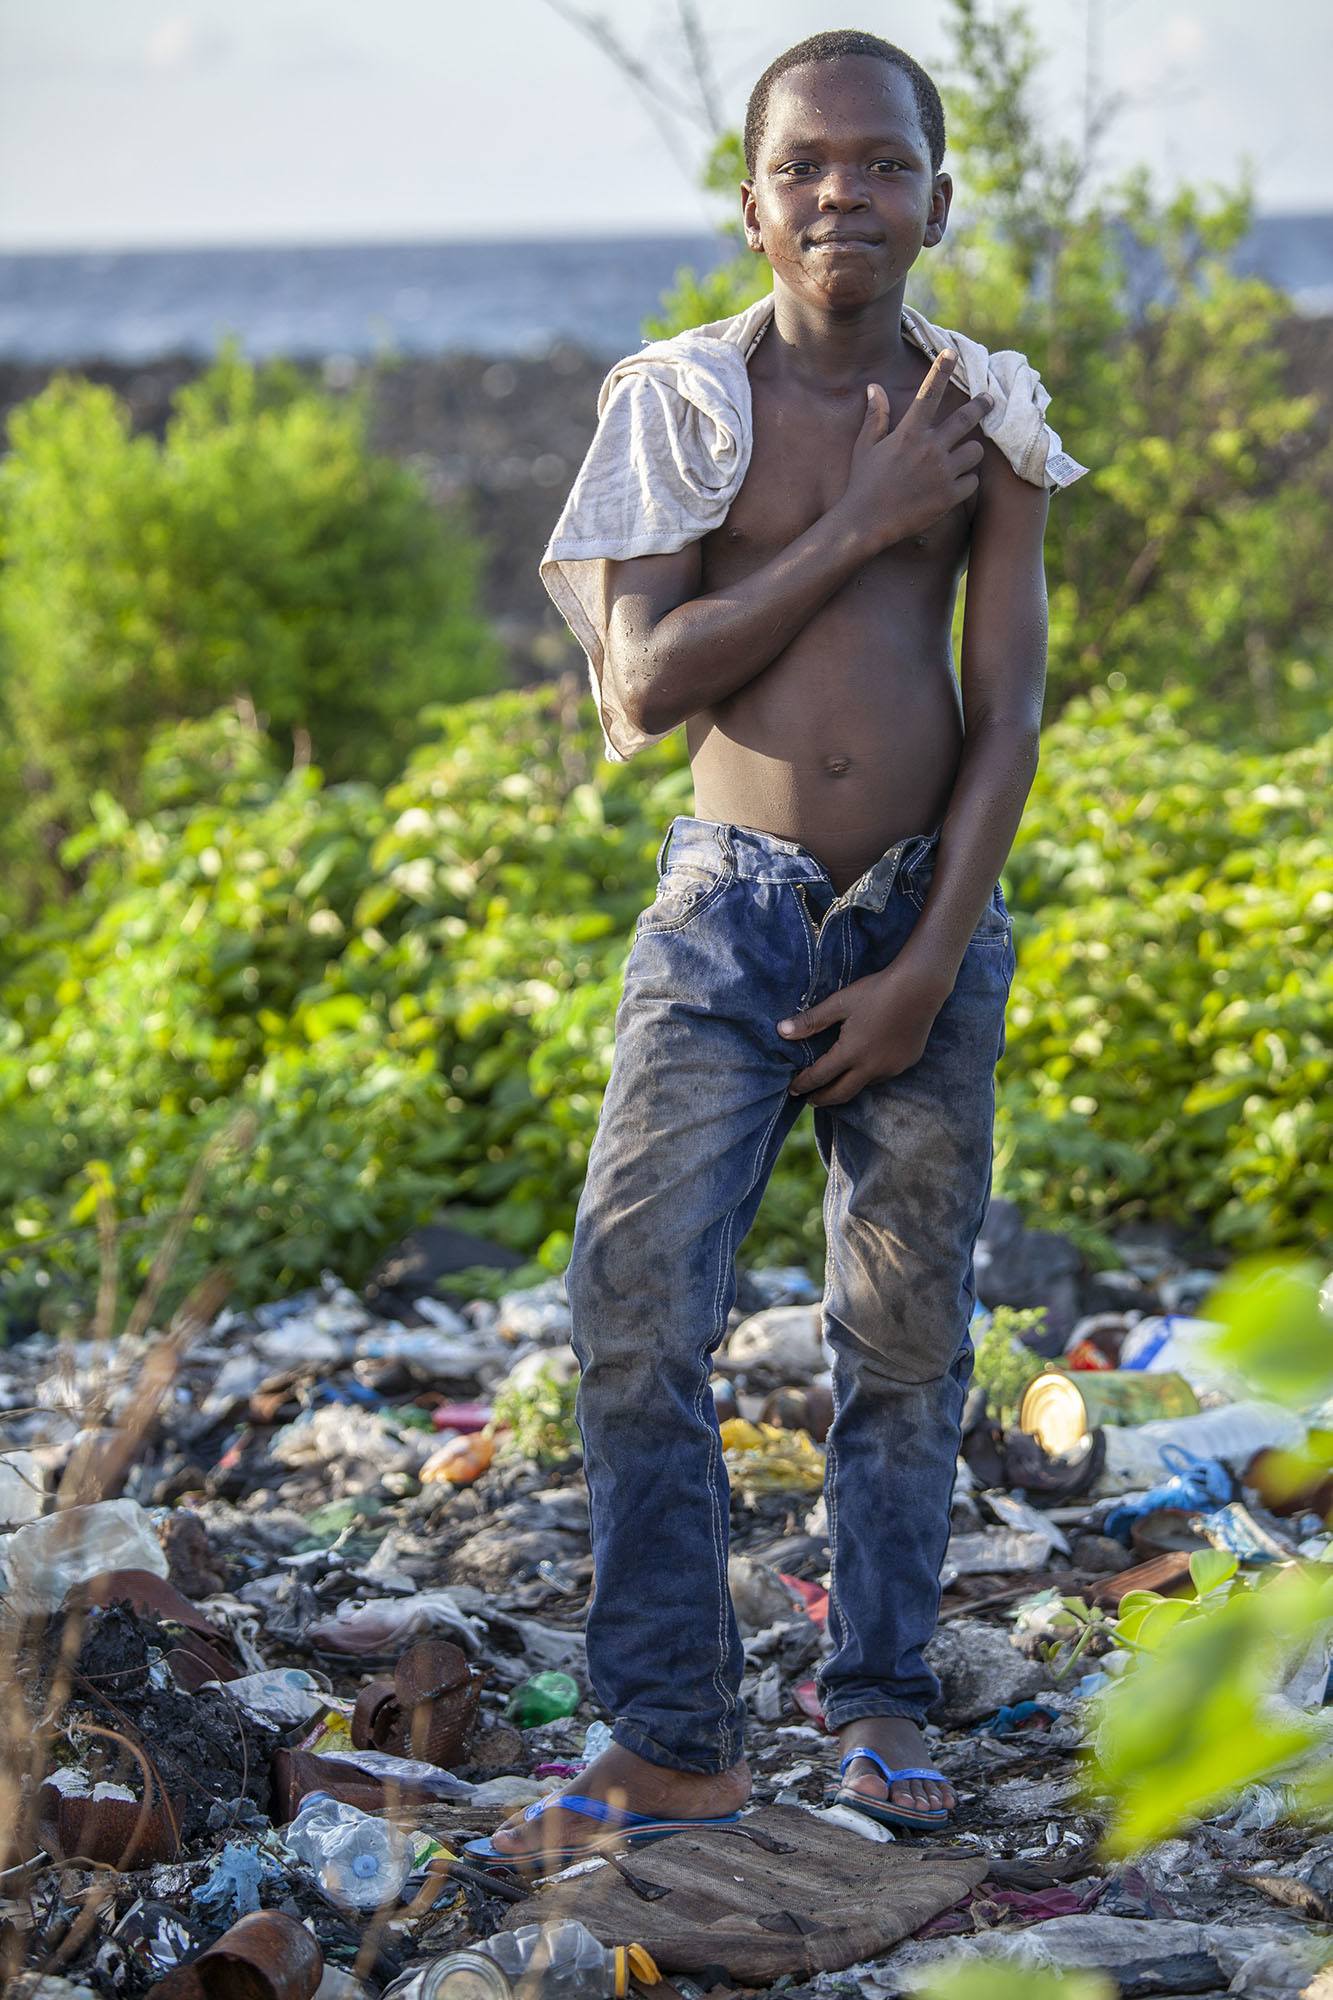 Teenage Comorian boy on lava rocks and trash in Moroni Comoros